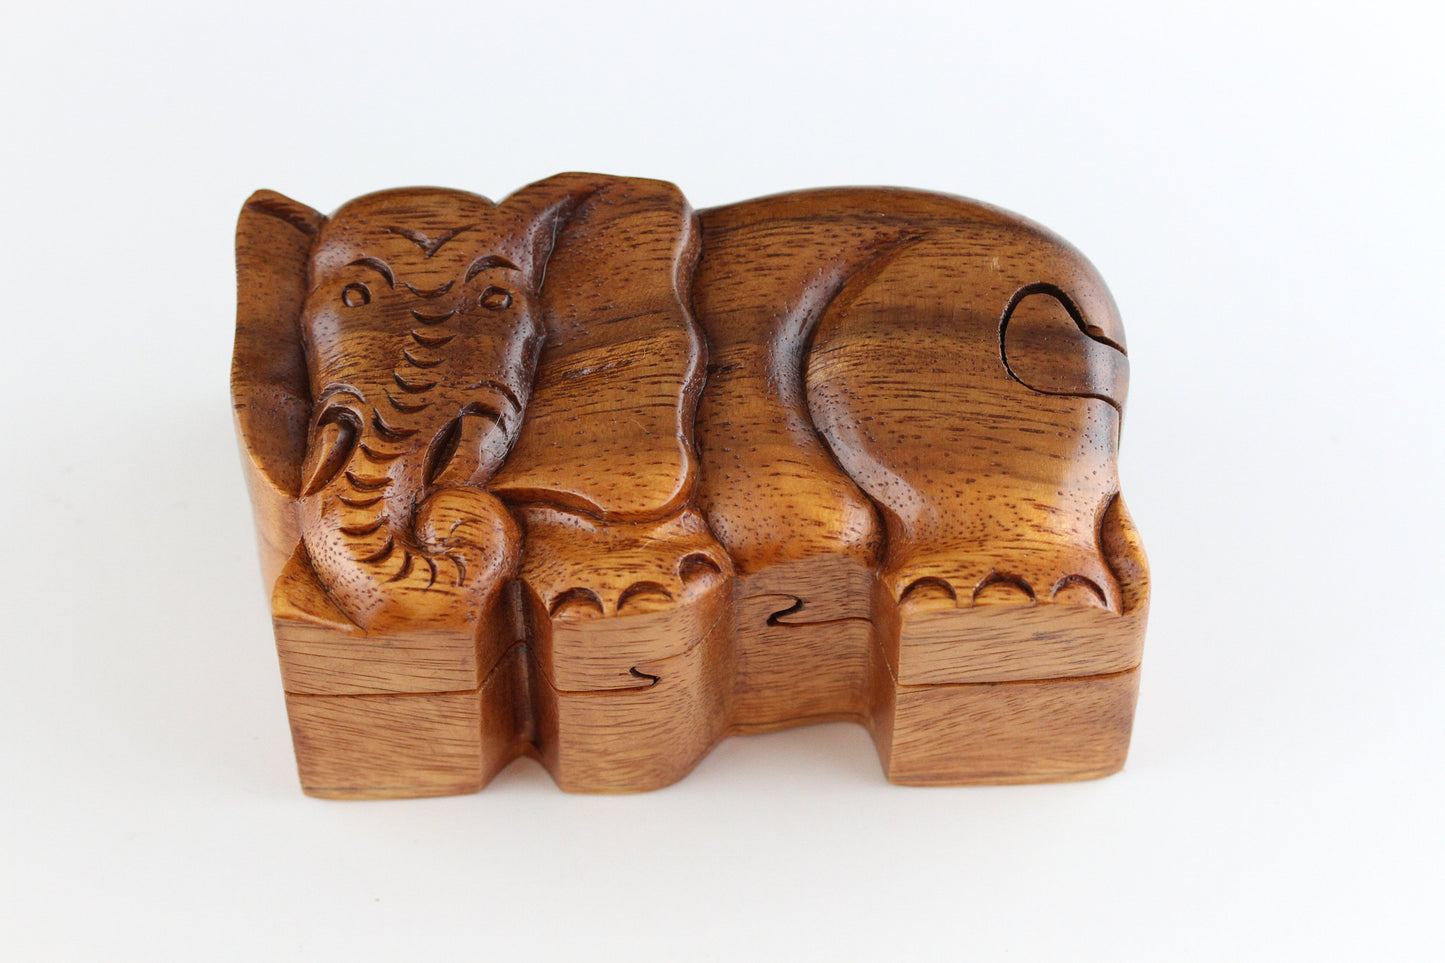 Elephant puzzle box - Hand carved wood box